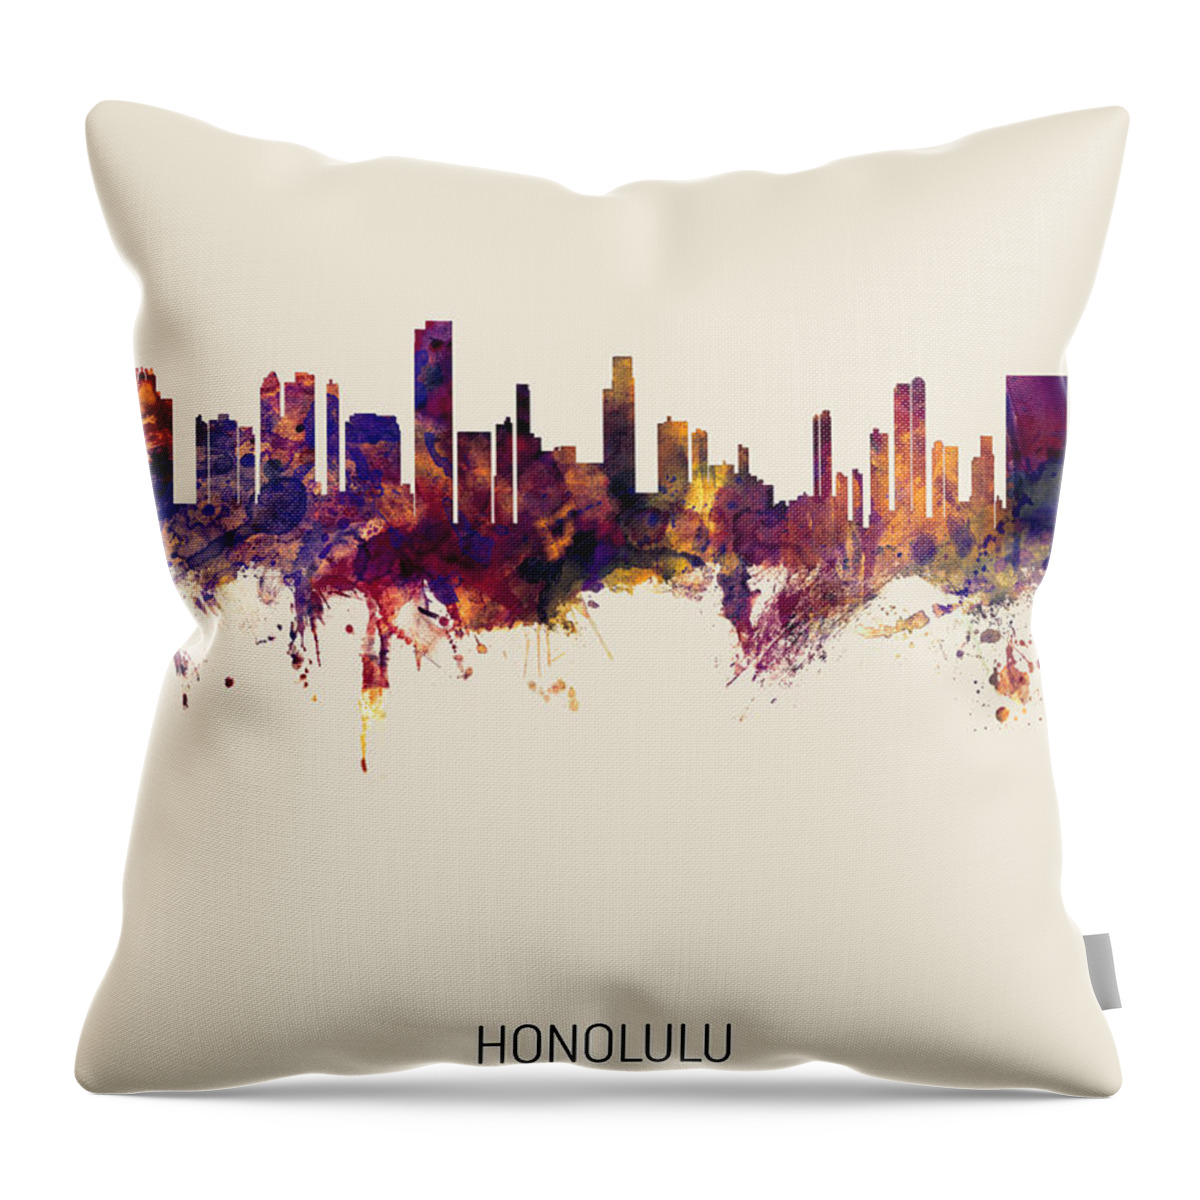 Honolulu Throw Pillow featuring the digital art Honolulu Hawaii Skyline by Michael Tompsett